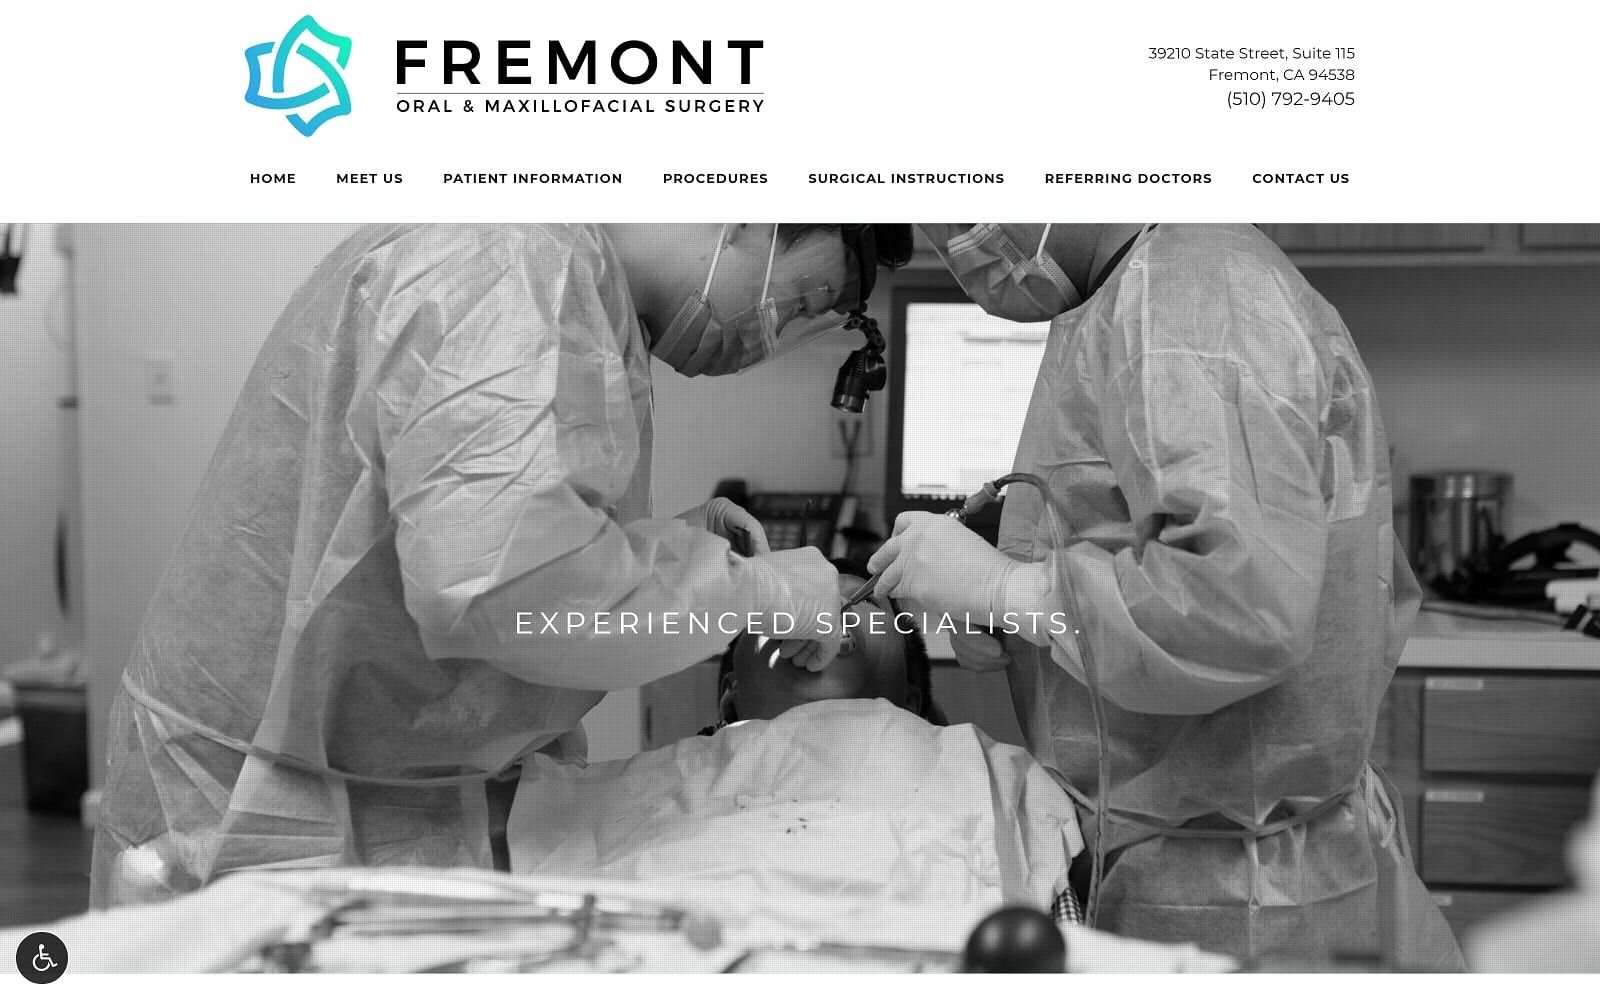 The screenshot of fremont oral & maxillofacial surgery fremontoms. Com website